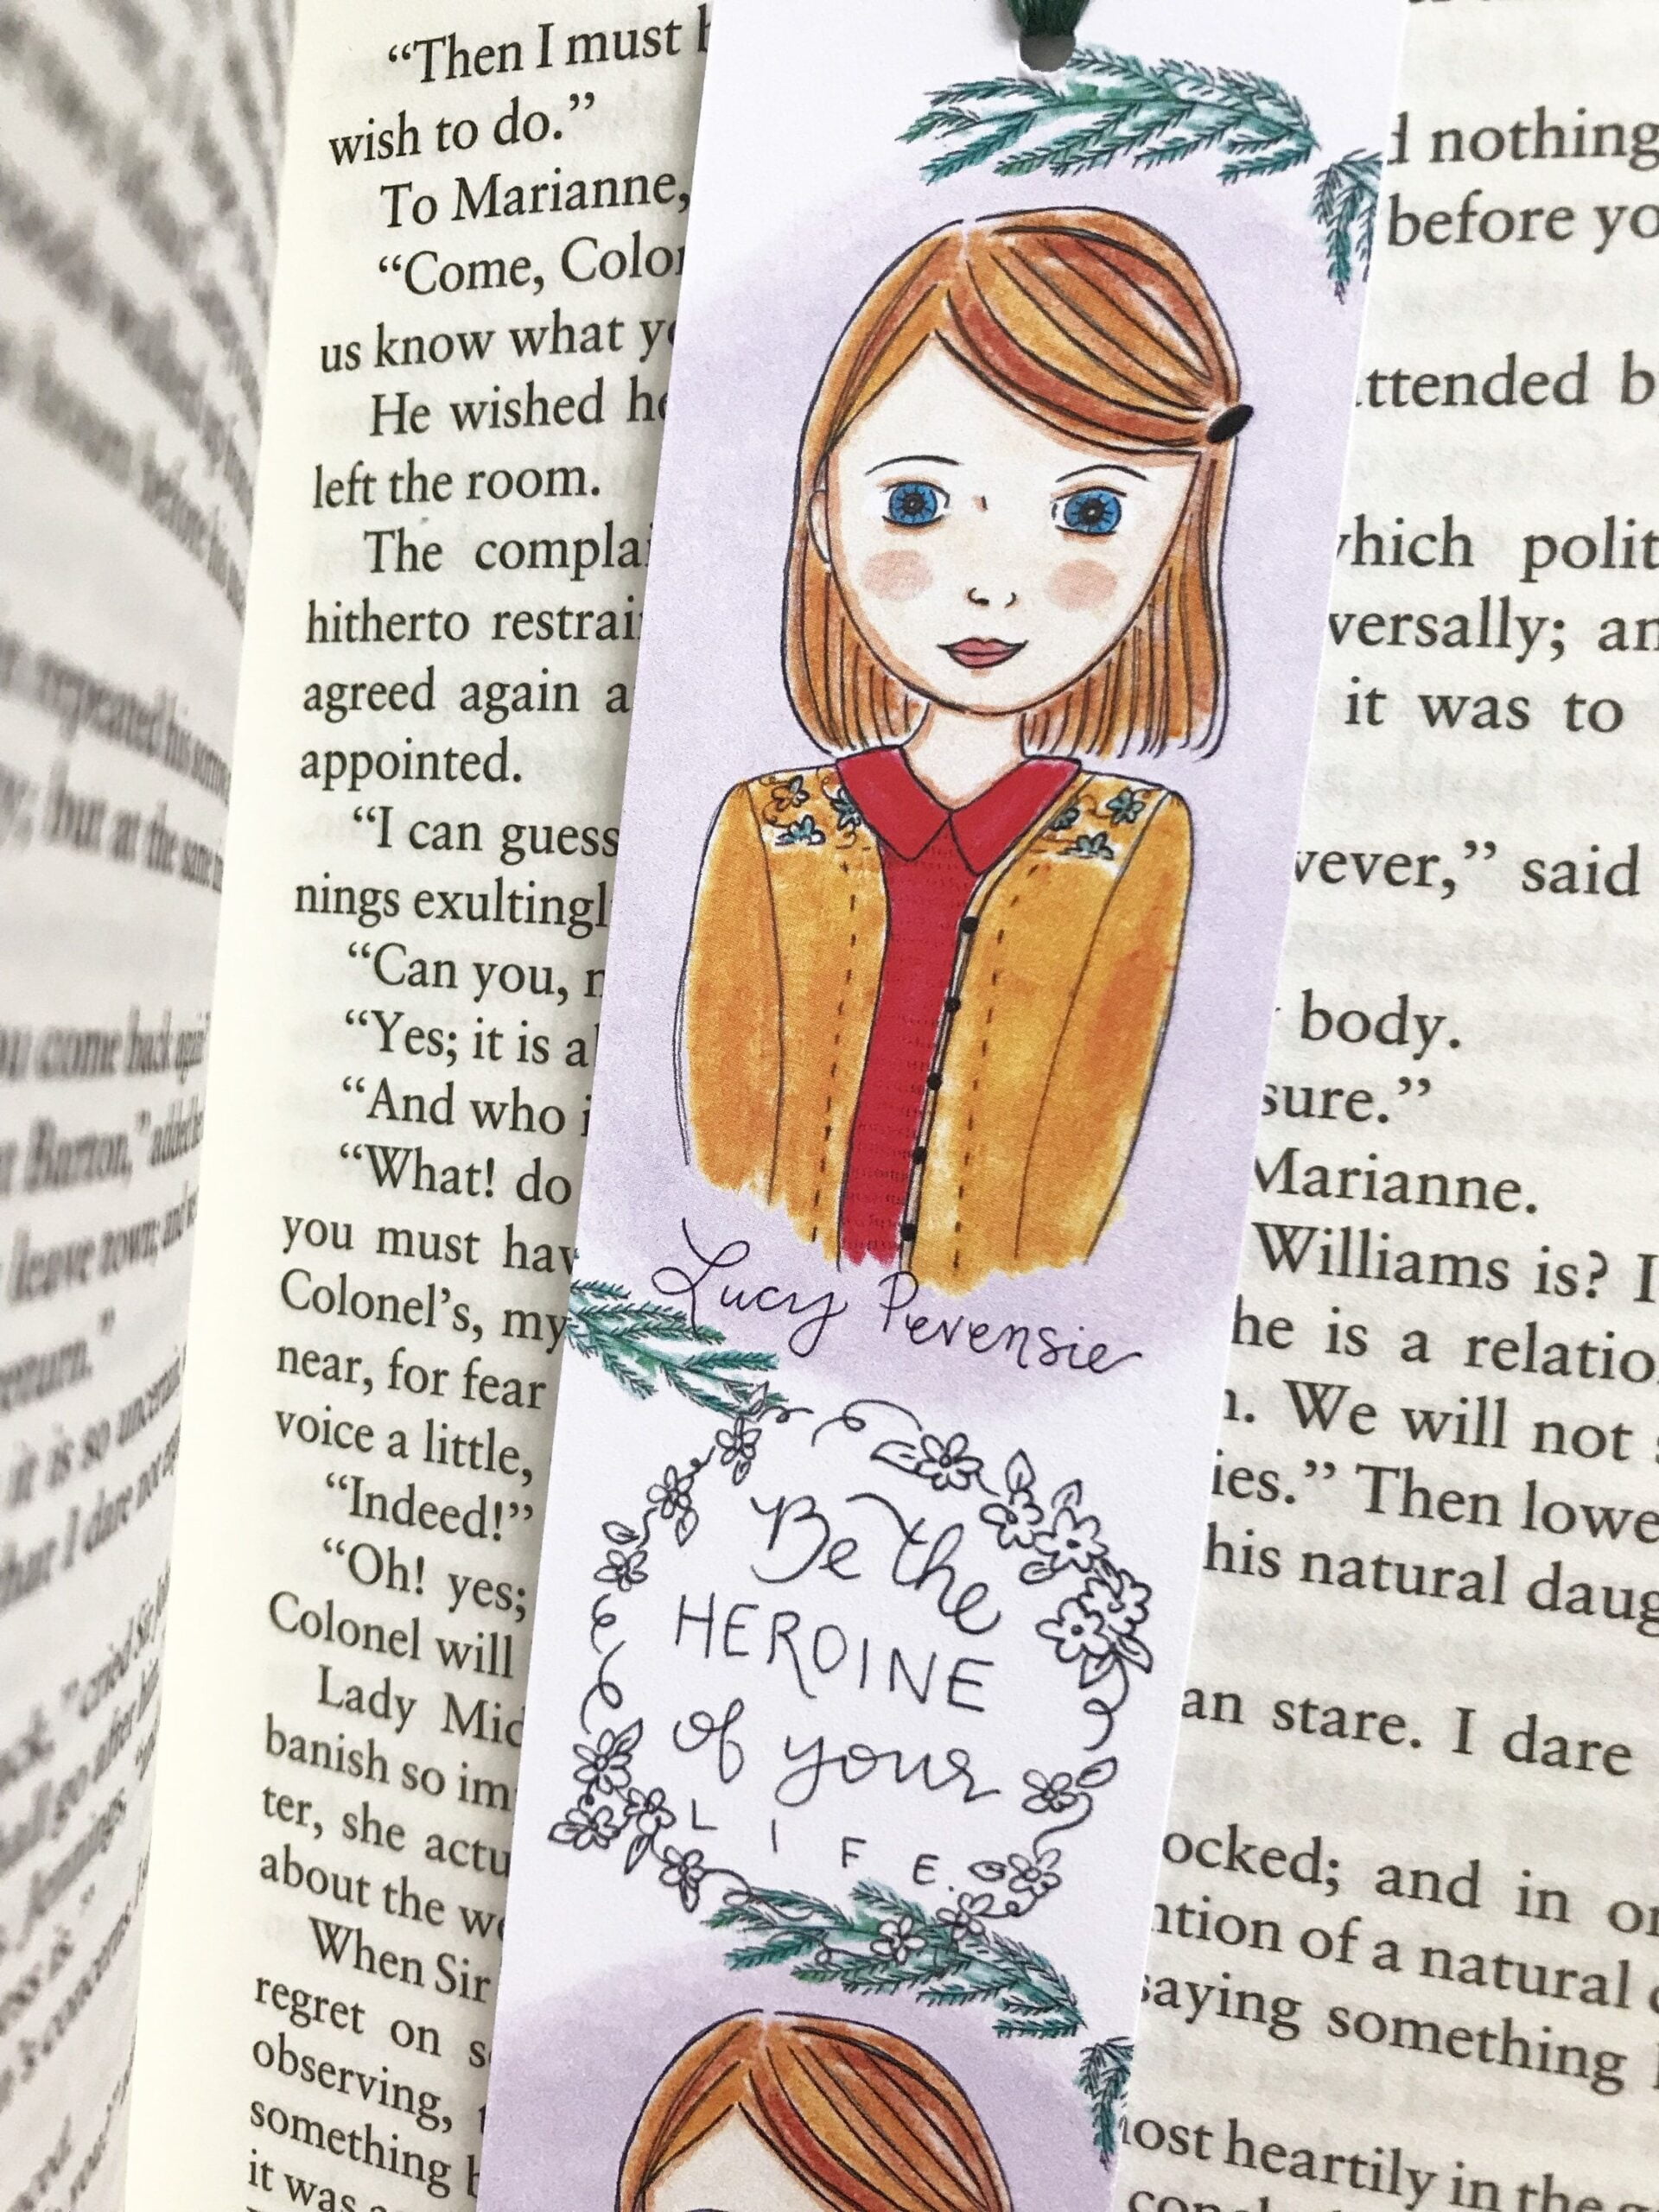 Free Printable Narnia Bookmarks